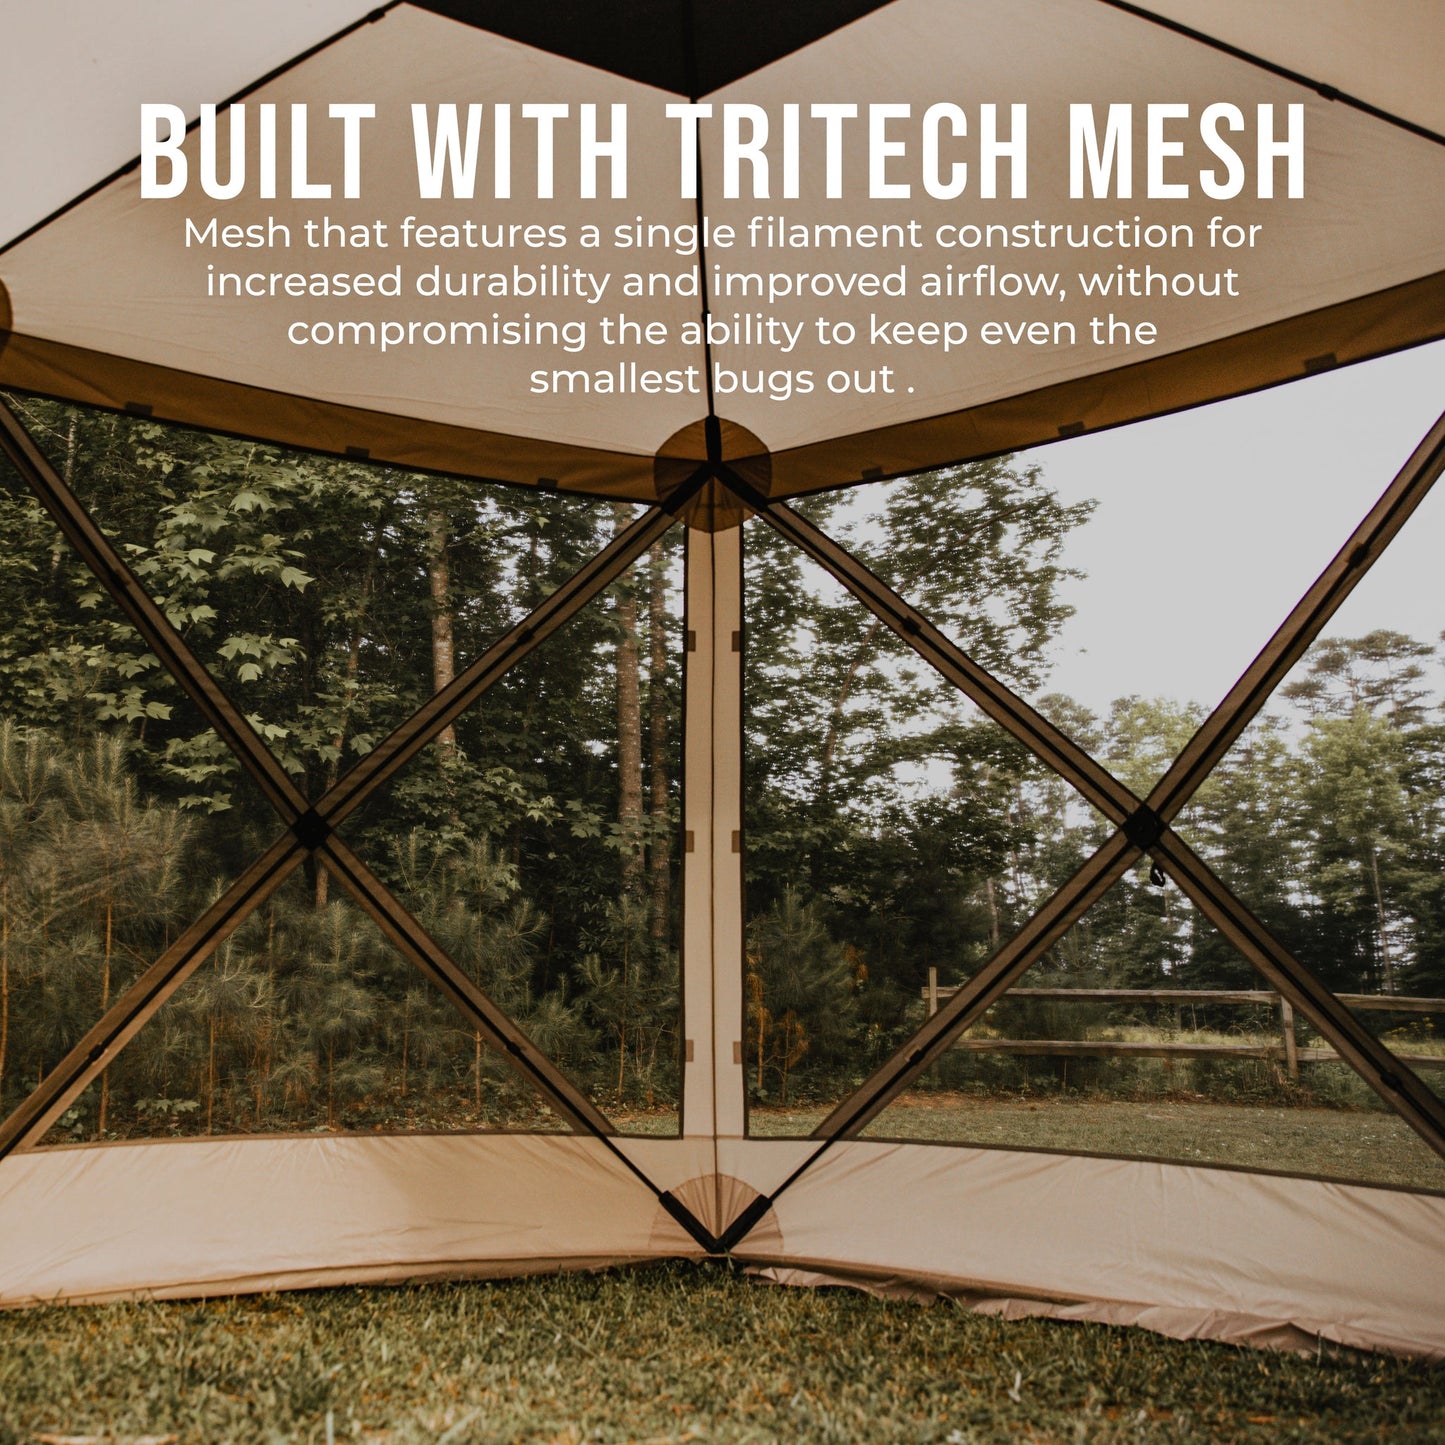 G6 6-sided Portable Gazebo With Tritech Mesh - by Gazelle Tents